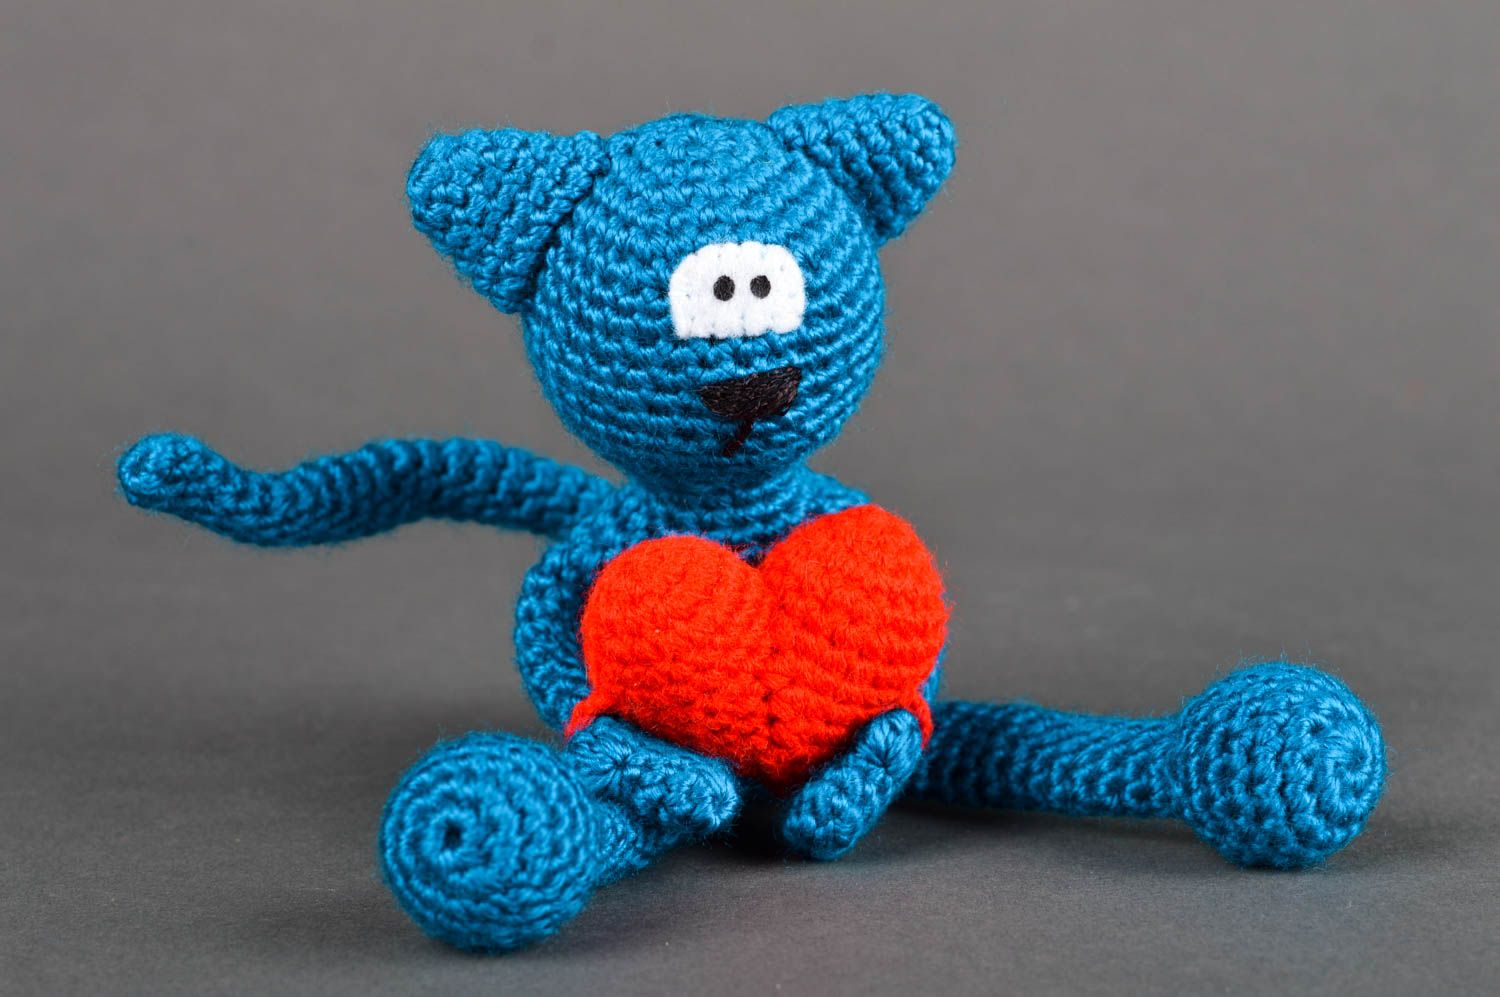 Unusual handmade crochet toy childrens toys soft toy birthday gift ideas photo 2